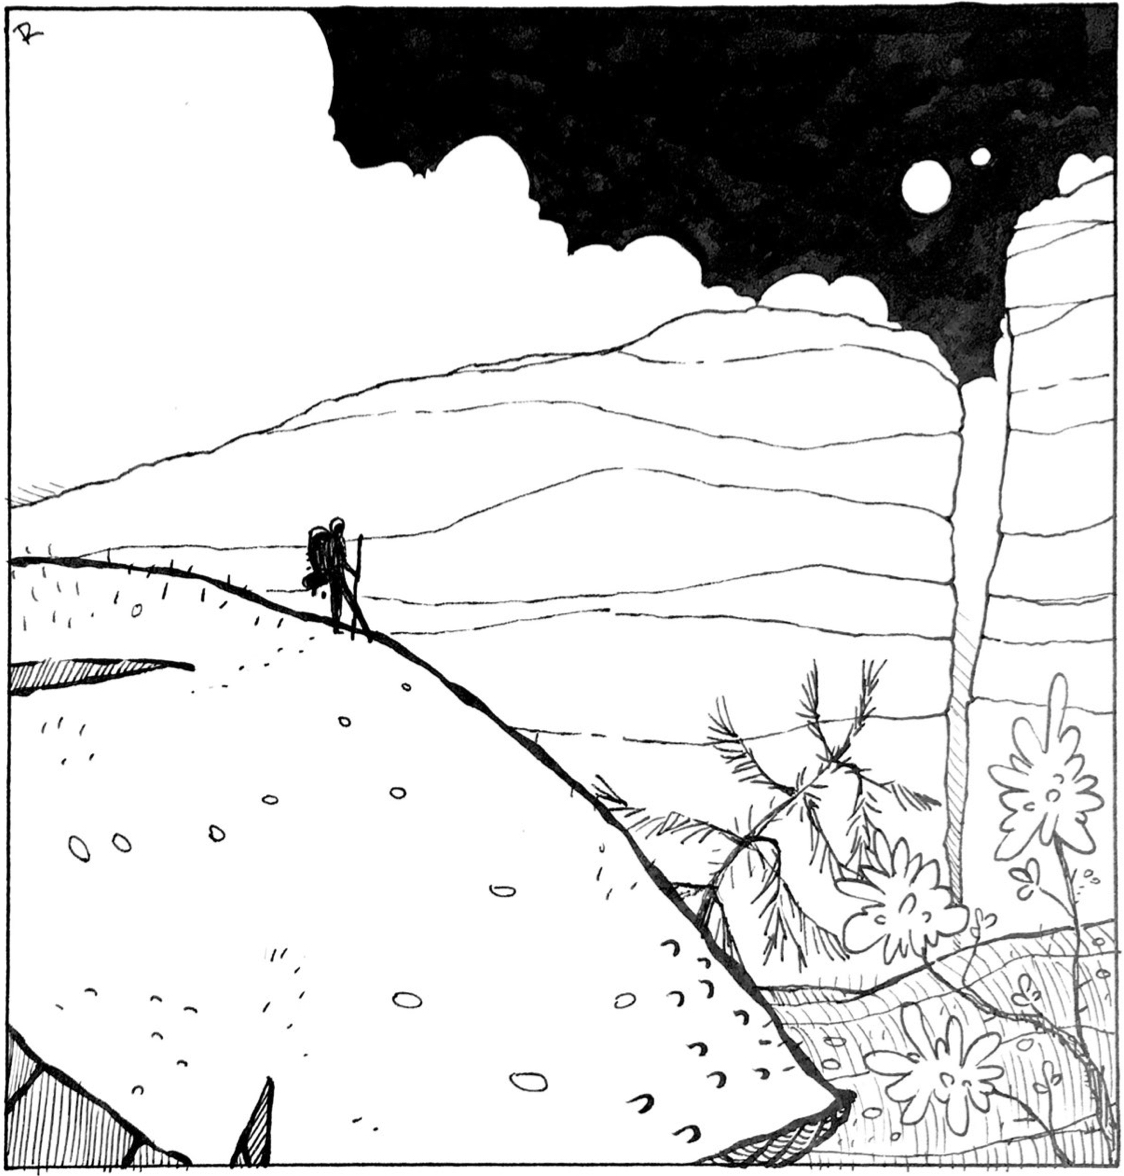 Sketch of a hiker on an alien world.